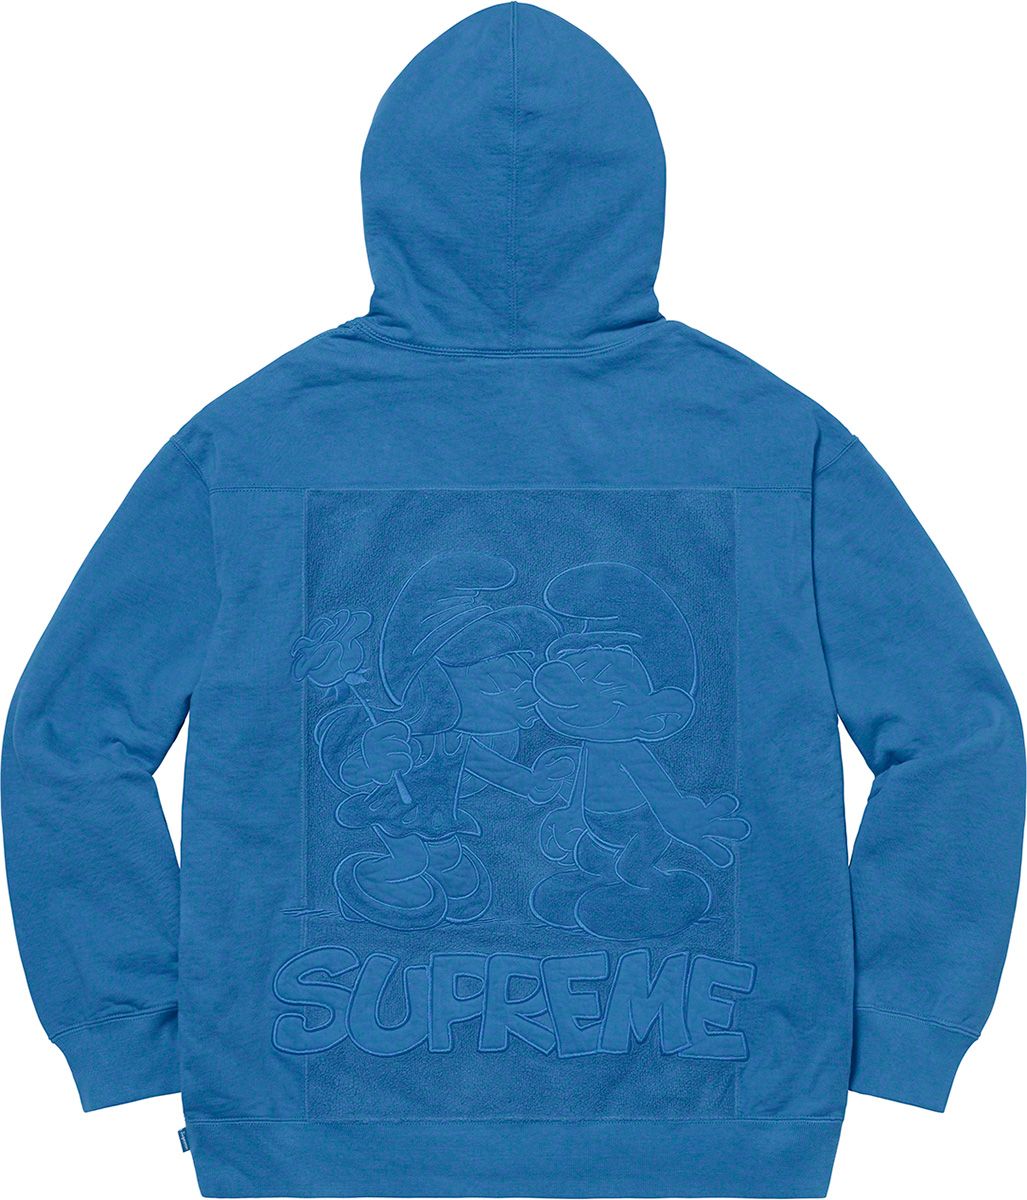 Supreme®/Smurfs™ Hooded Sweatshirt - Fall/Winter 2020 Preview 